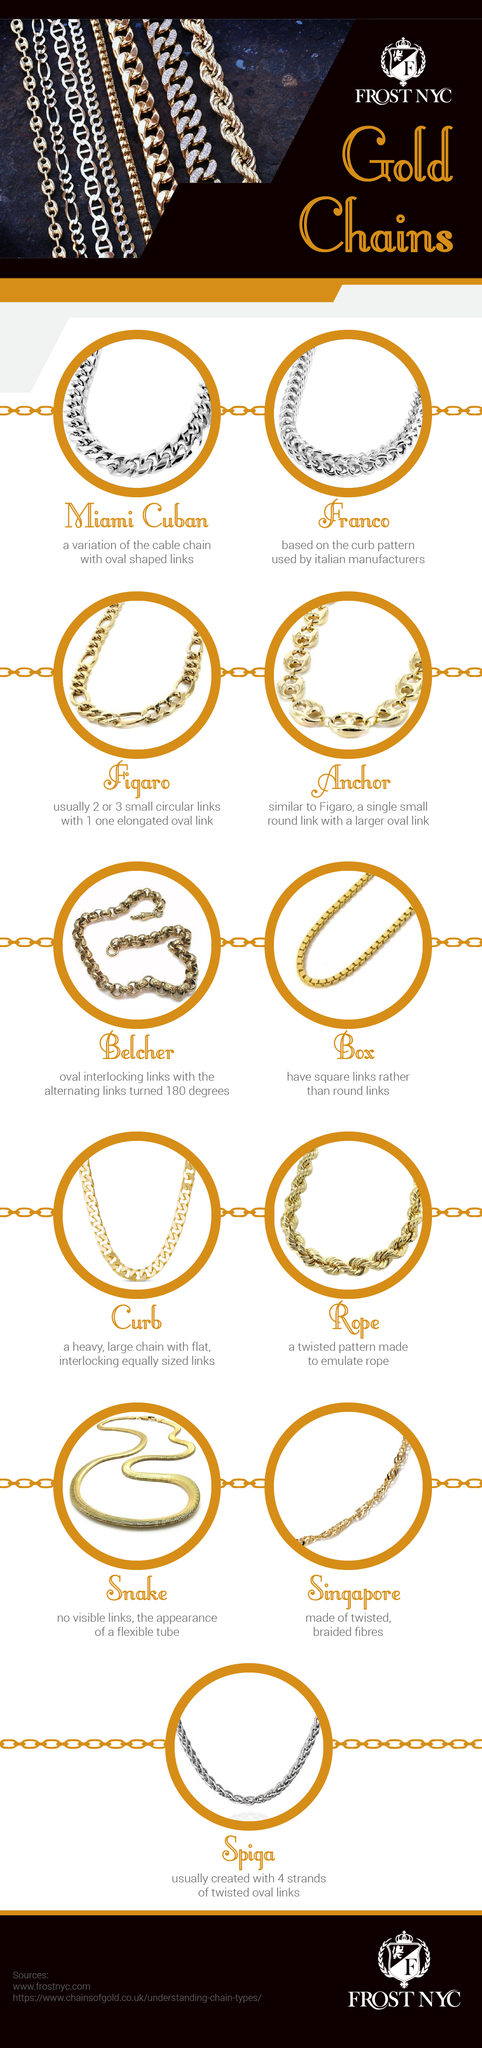 Gold Chain Info graphic 